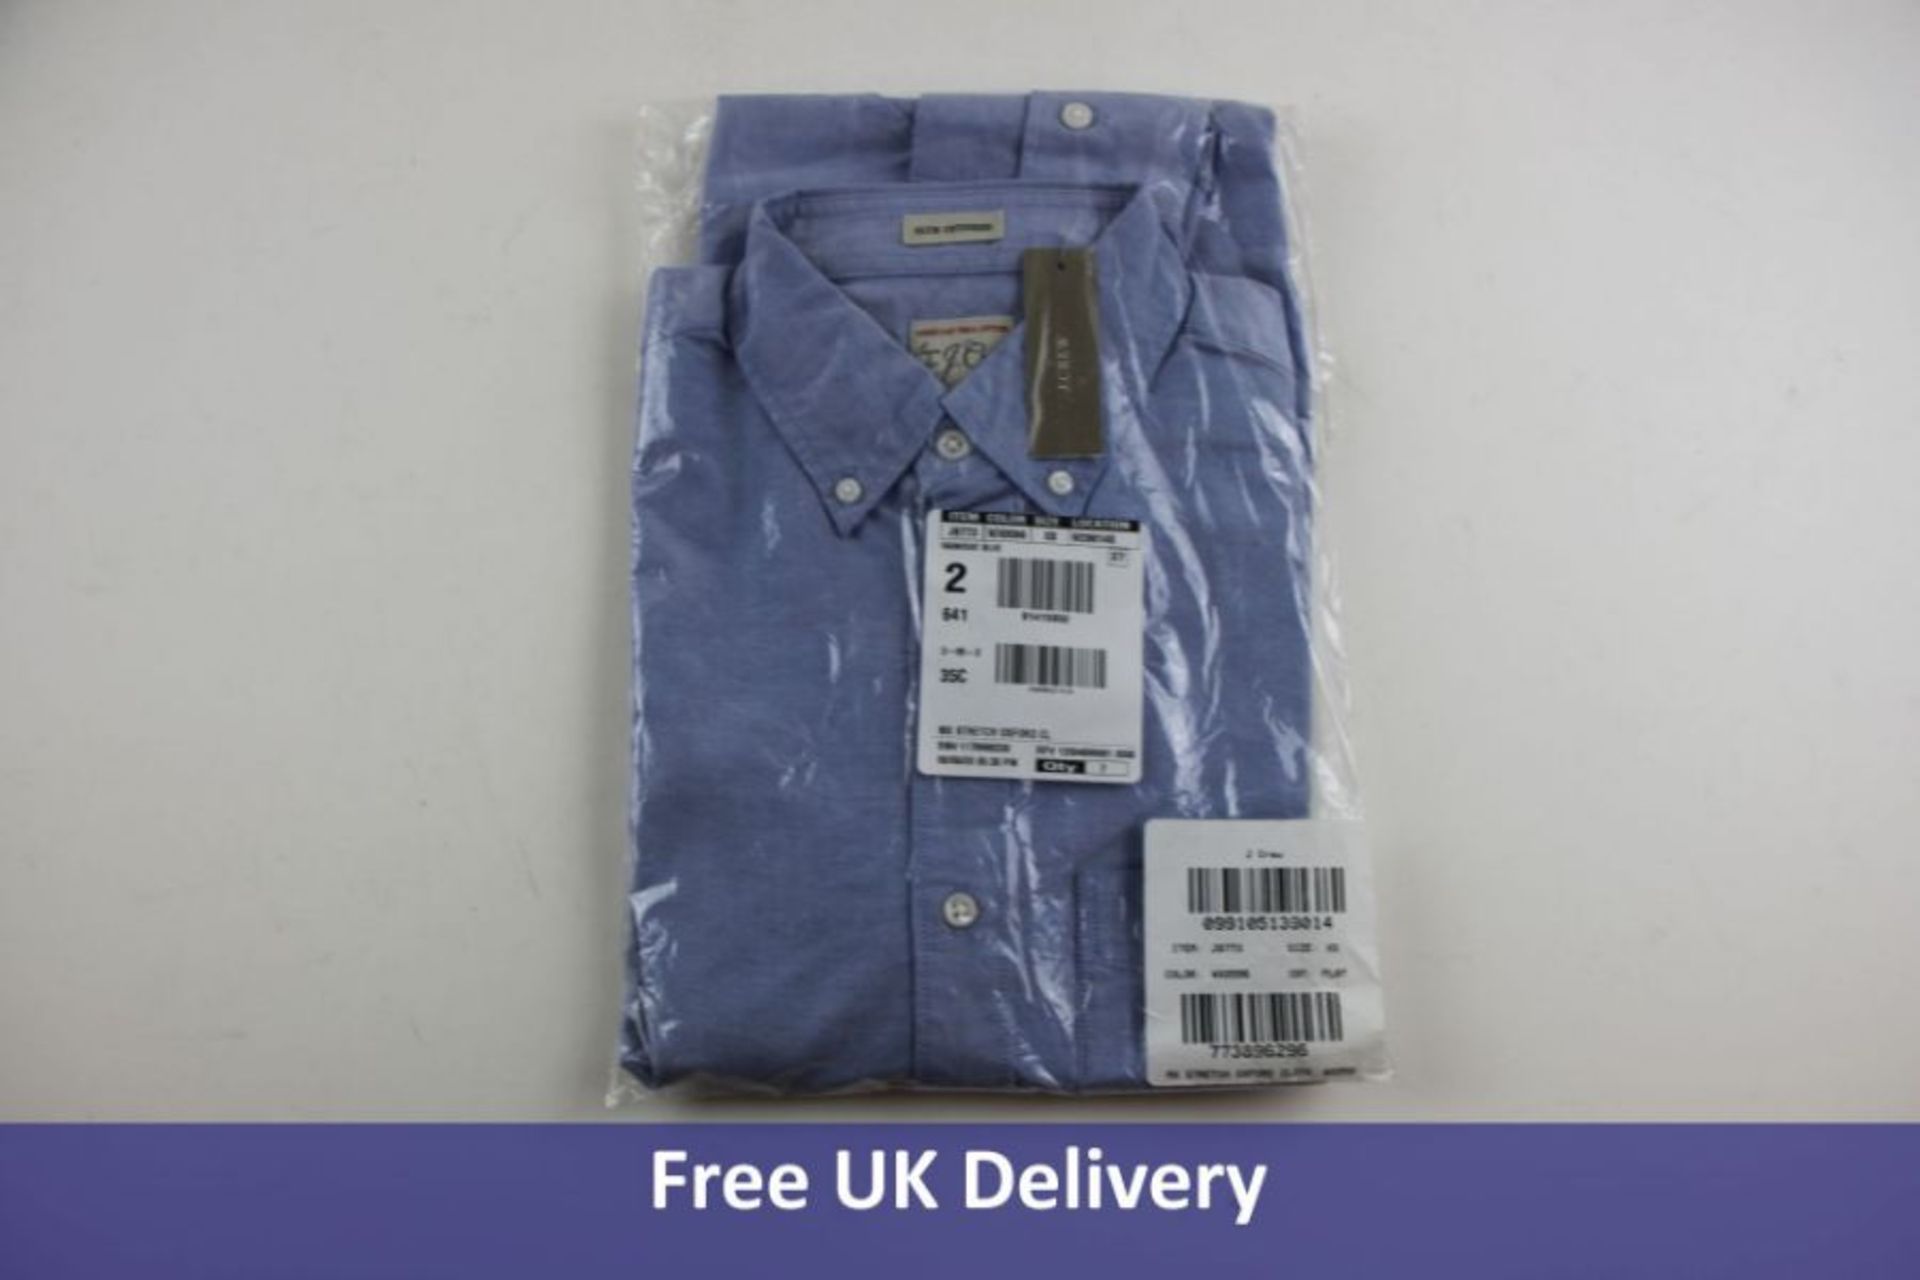 J Crew Men's Slim Untucked American Pima Cotton Oxford Shirt, Raincoat Blue, Size XS